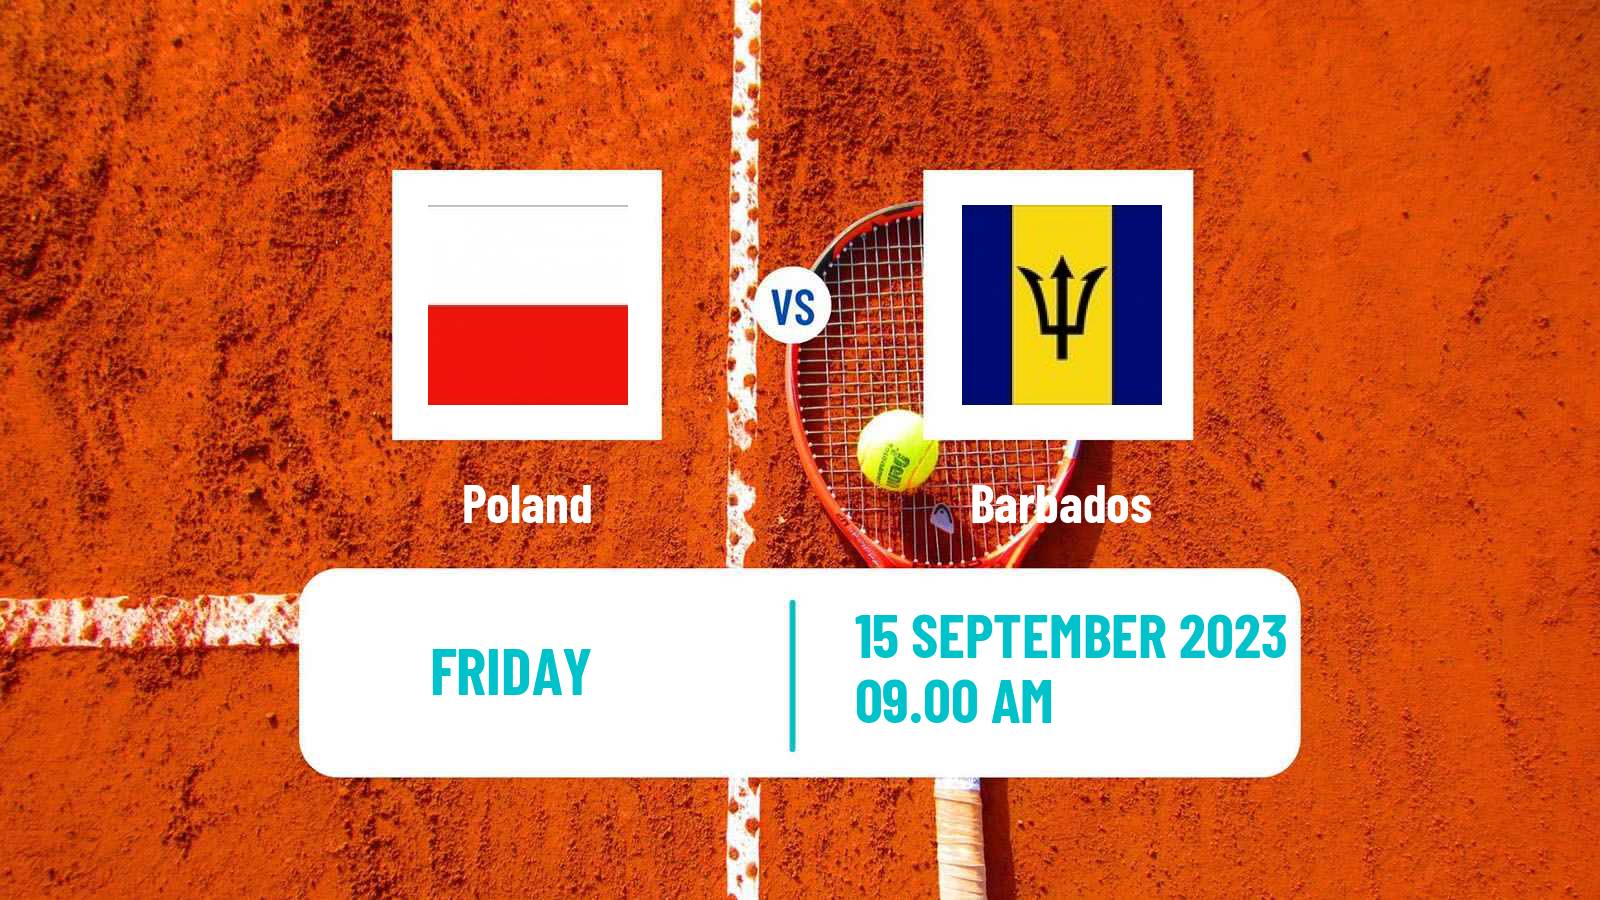 Tennis Davis Cup World Group II Teams Poland - Barbados